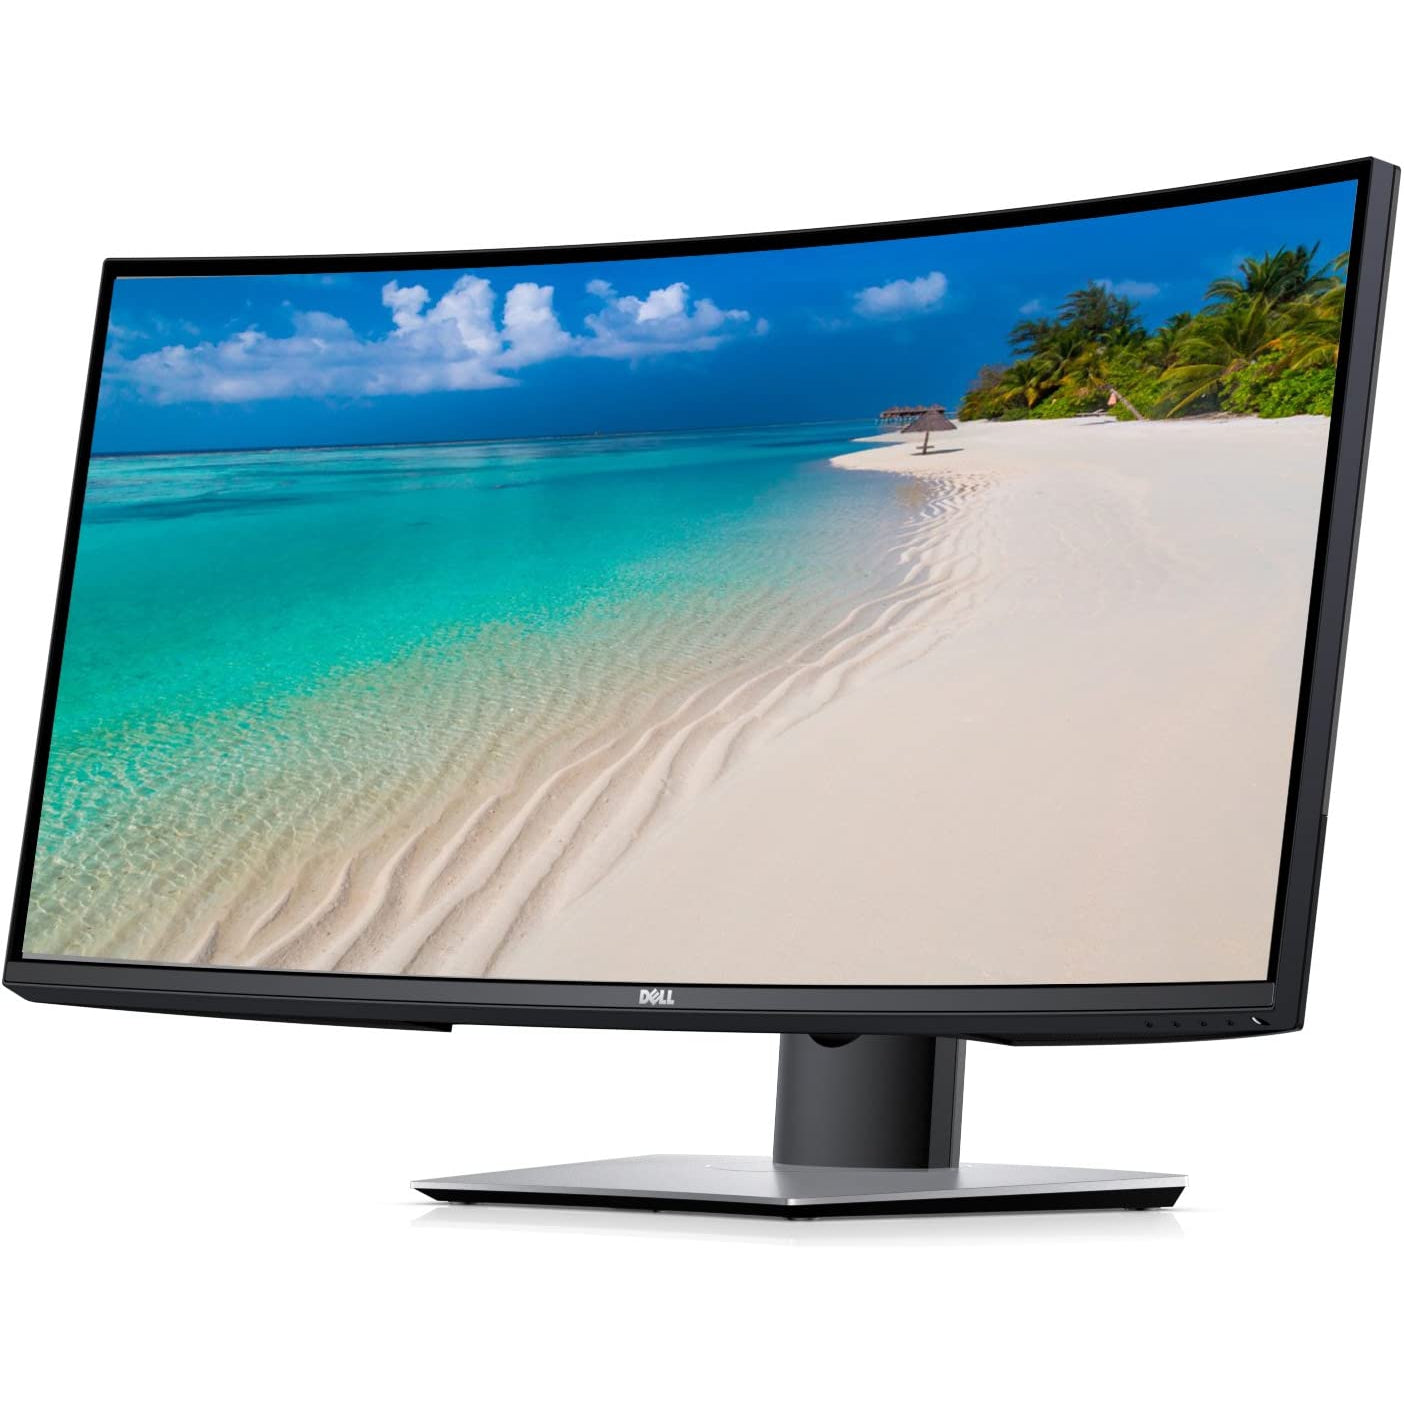 Dell UltraSharp U3417W Curved Monitor, 34”, Black - Excellent